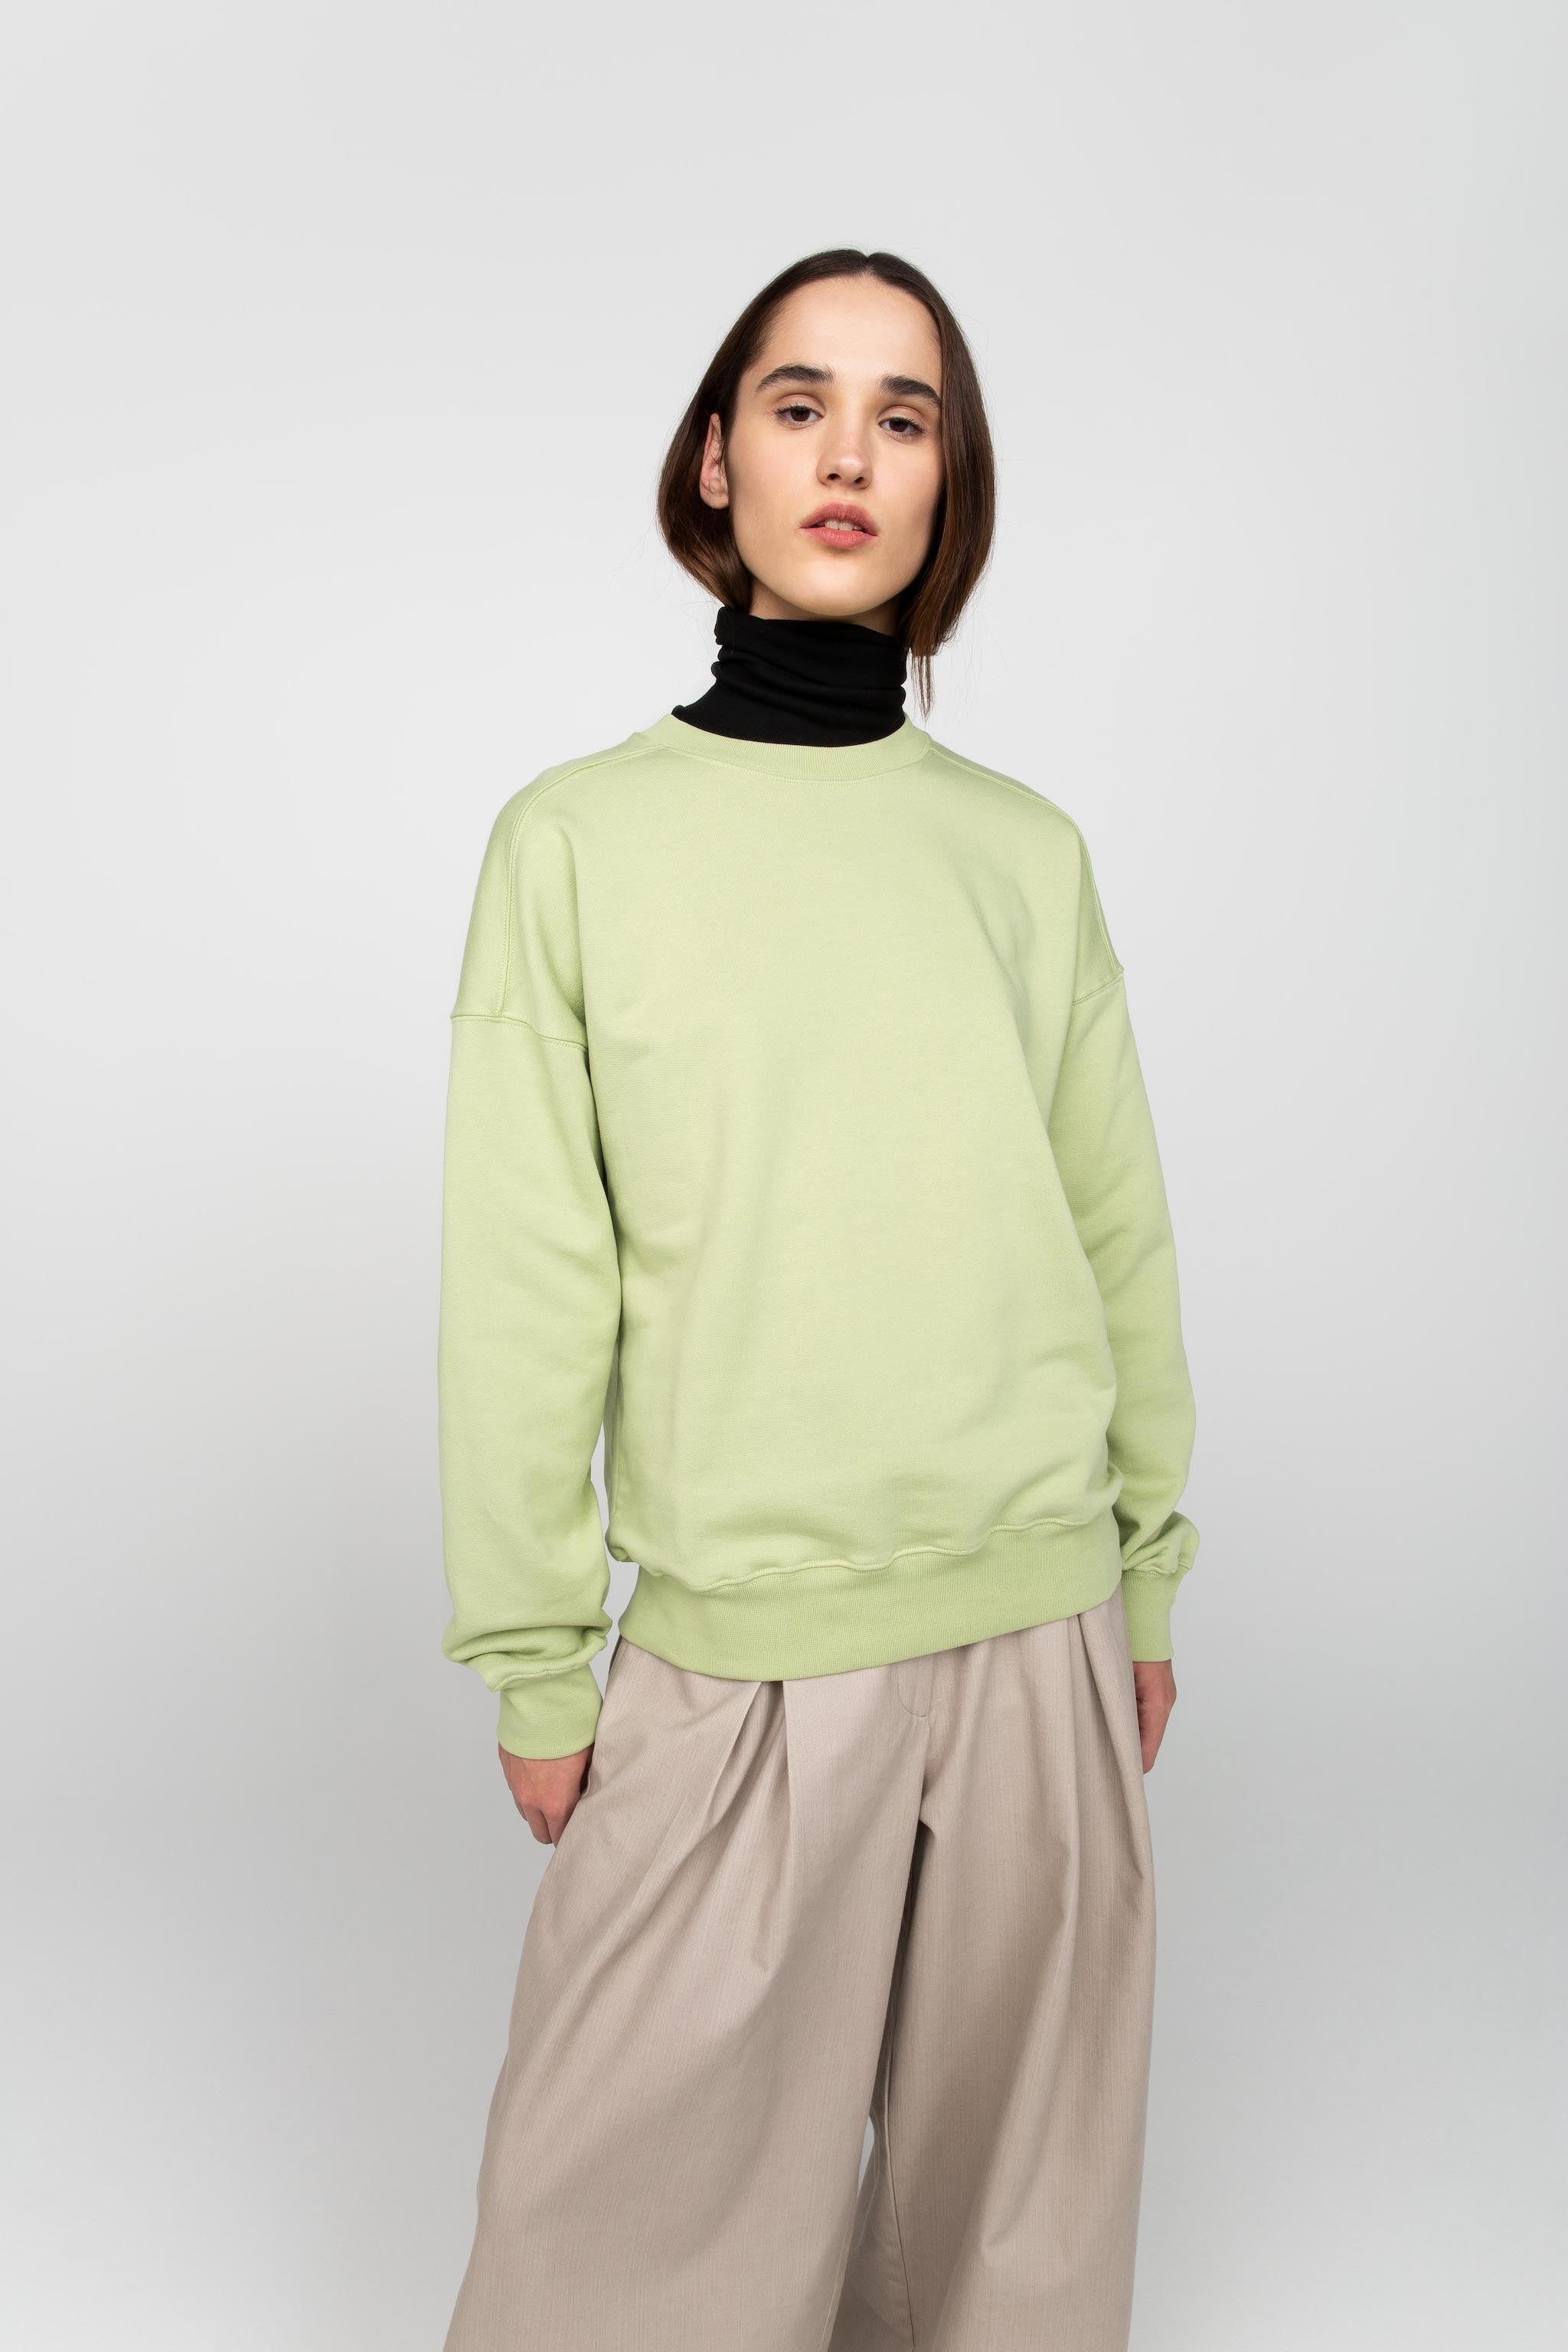 Green unisex sweatshirt